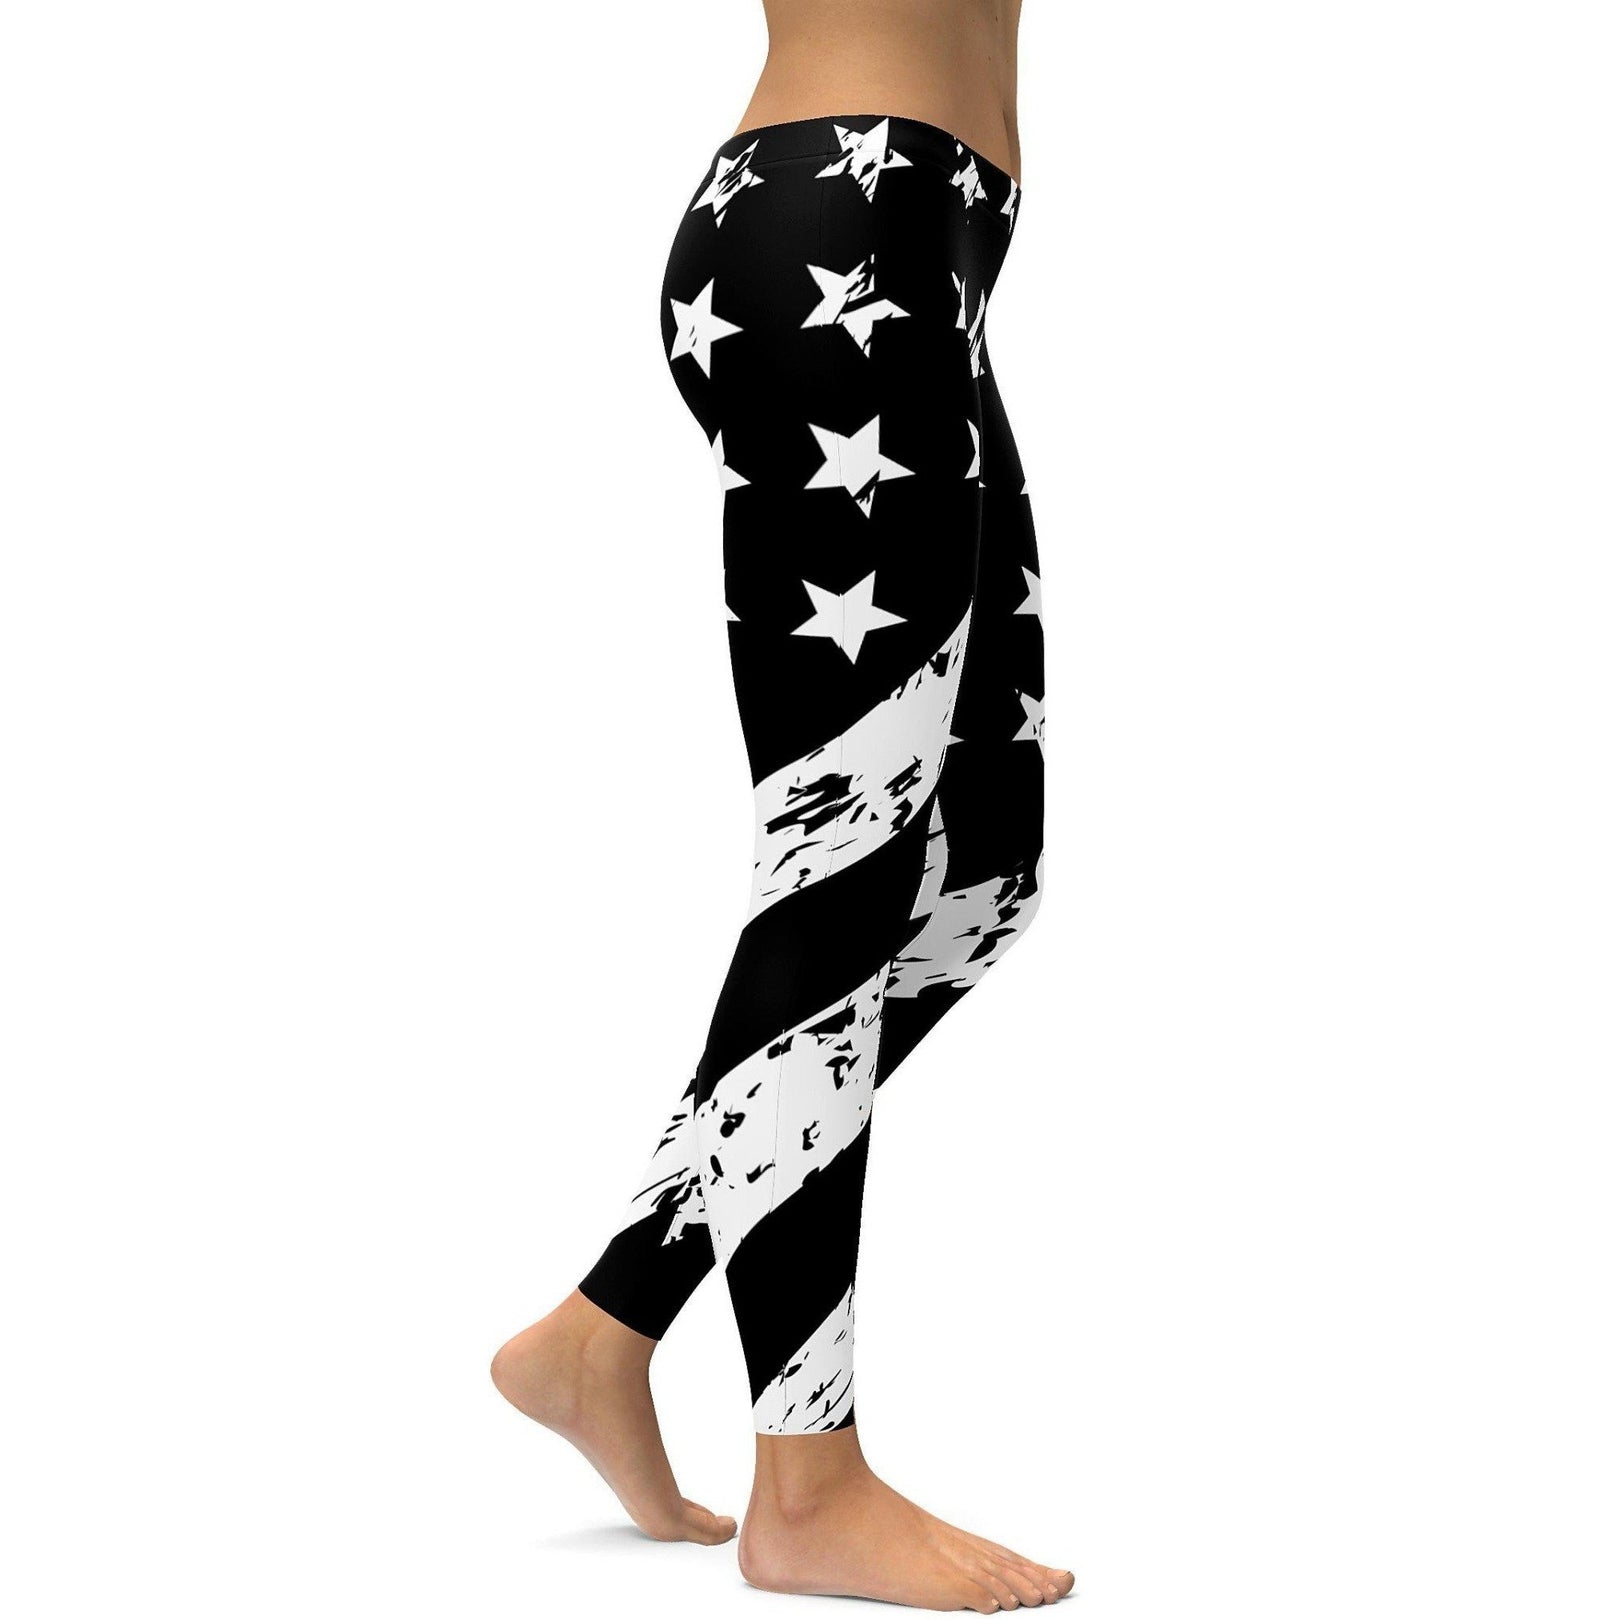 Black_And_White_American_Flag_Leggings_Yoga_Pants